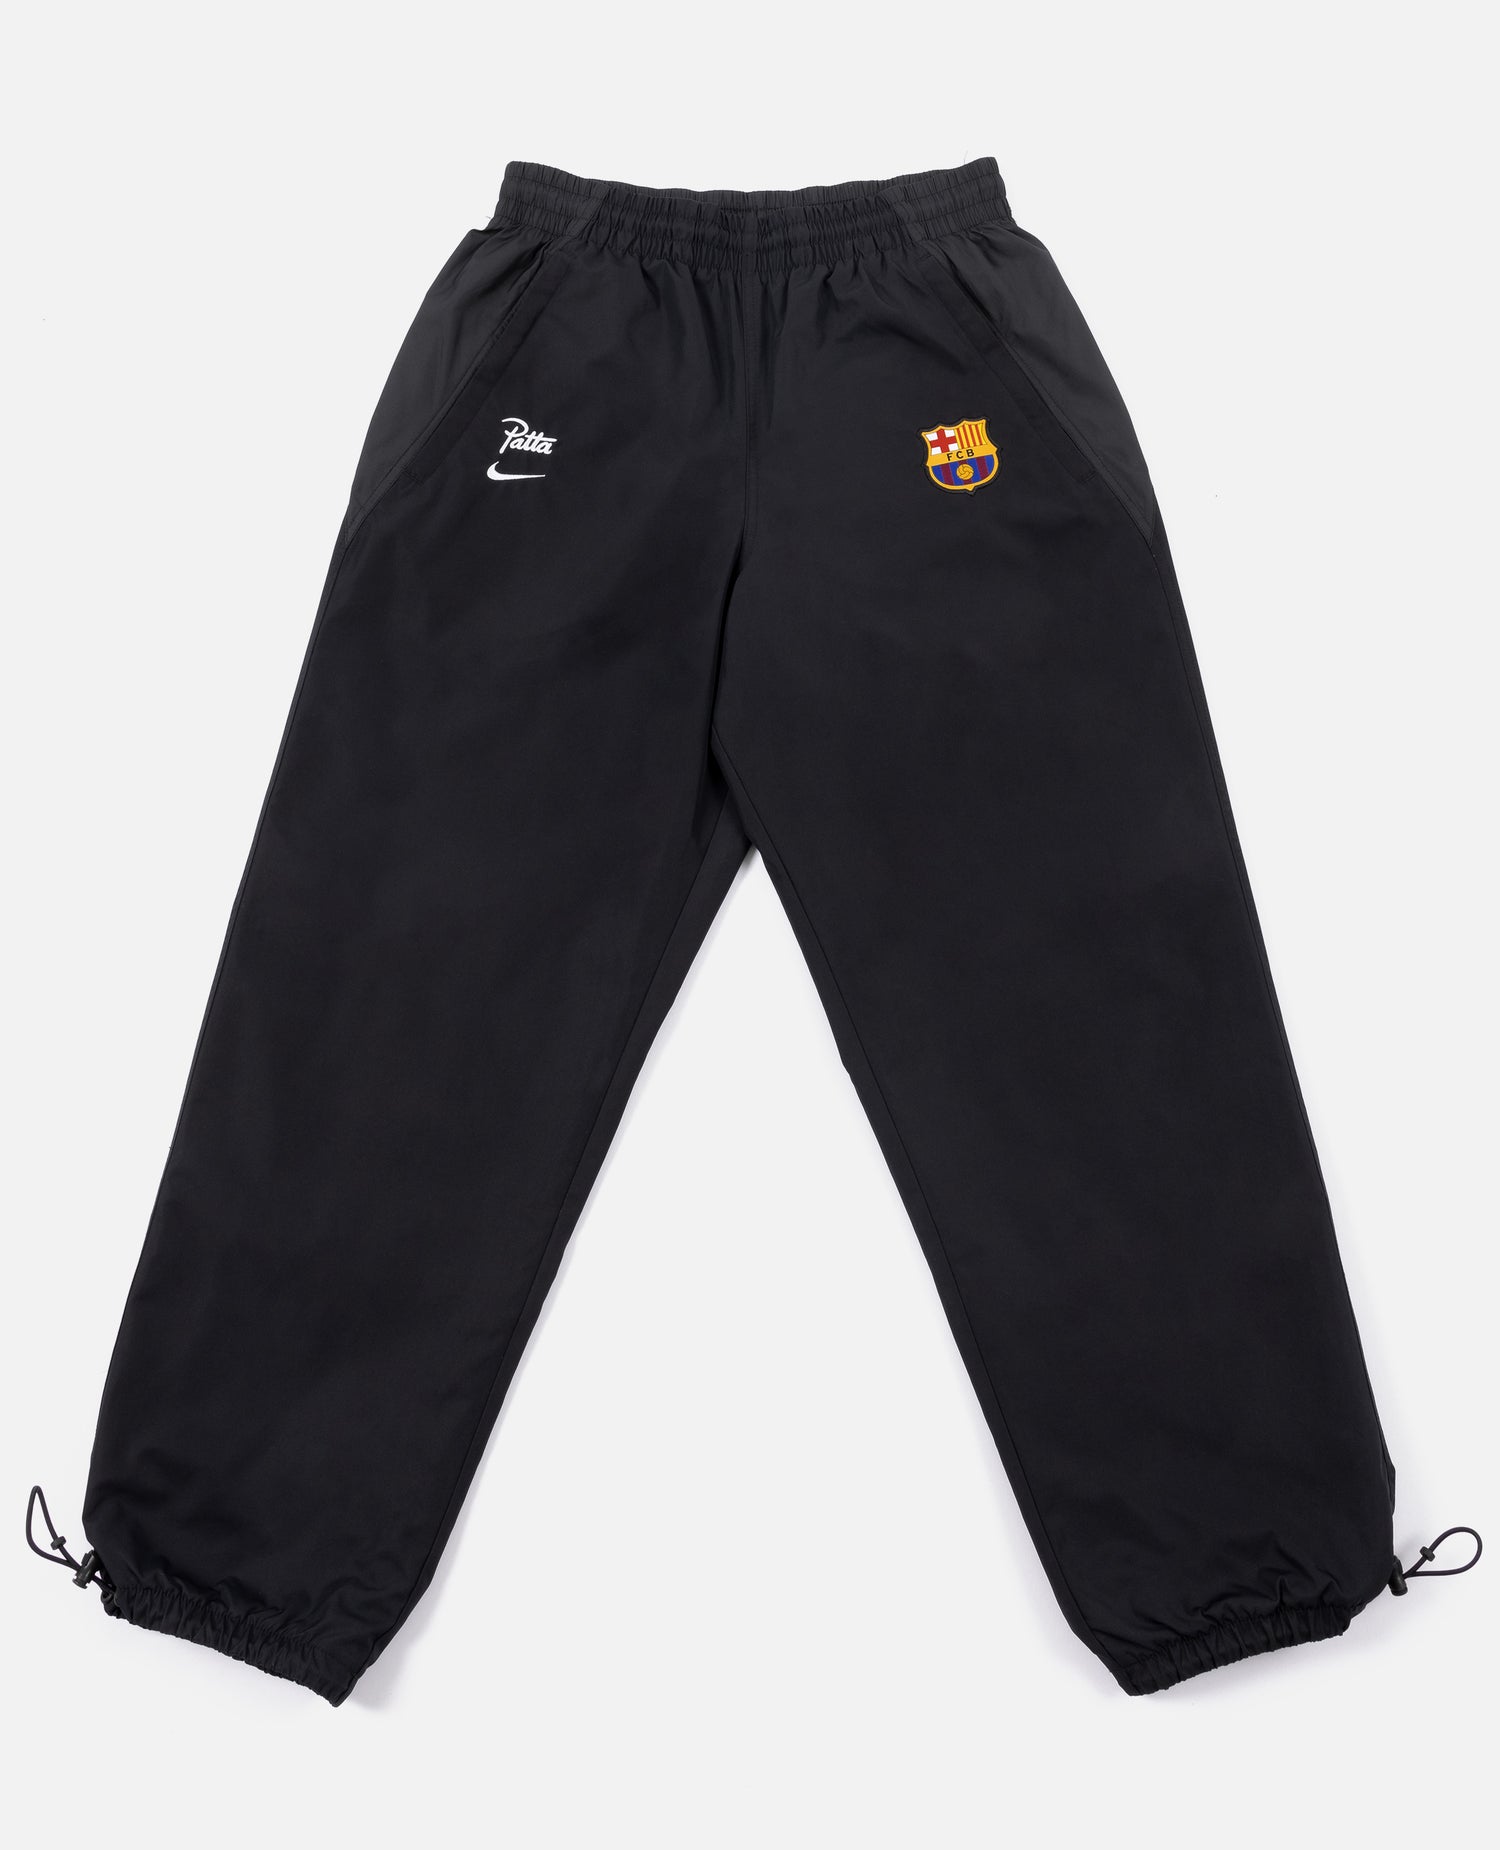 Pantalon de survêtement FCB x Patta Culers del Món (Noir/Blanc)